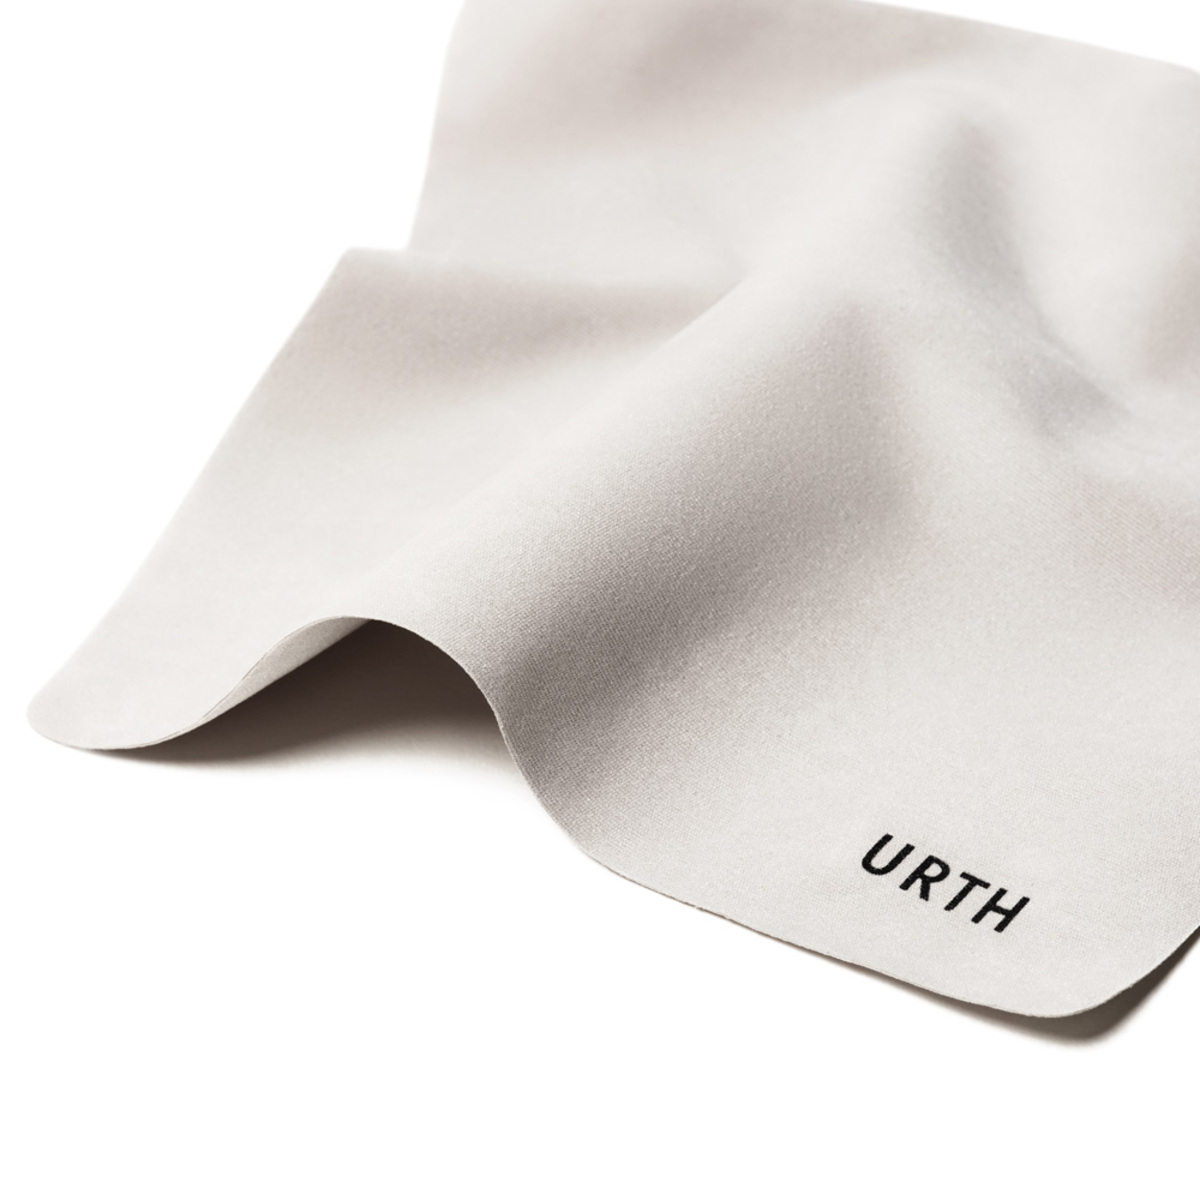 Urth 43mm Ethereal ⅛ Black Mist Objektivfilter (Plus+)